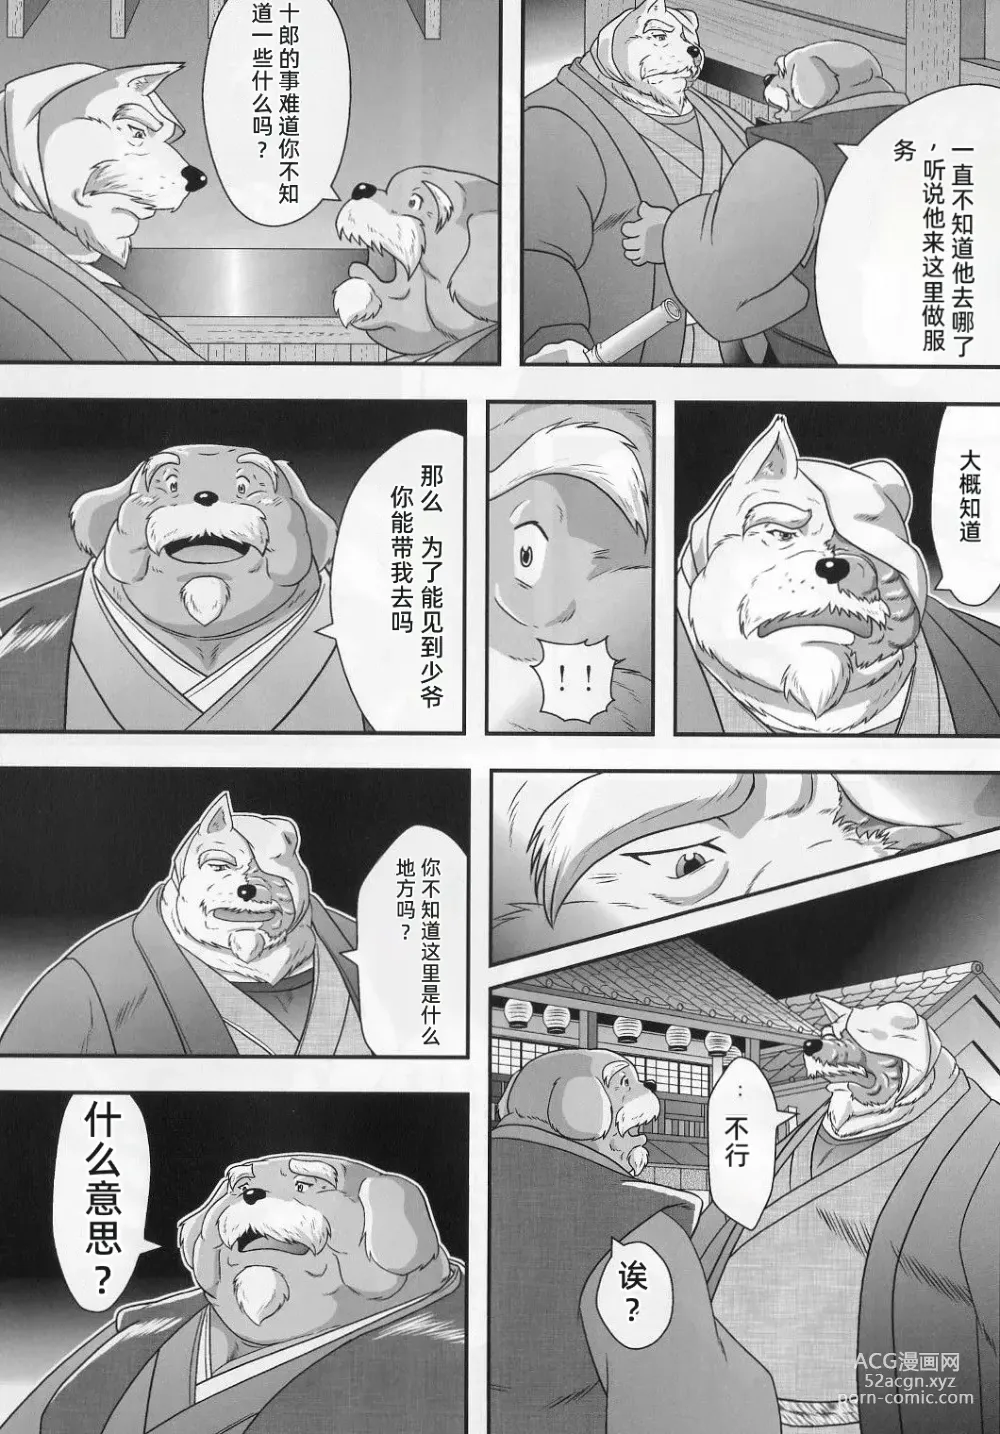 Page 50 of doujinshi 兽之楼郭 月华缭乱 月阴之章